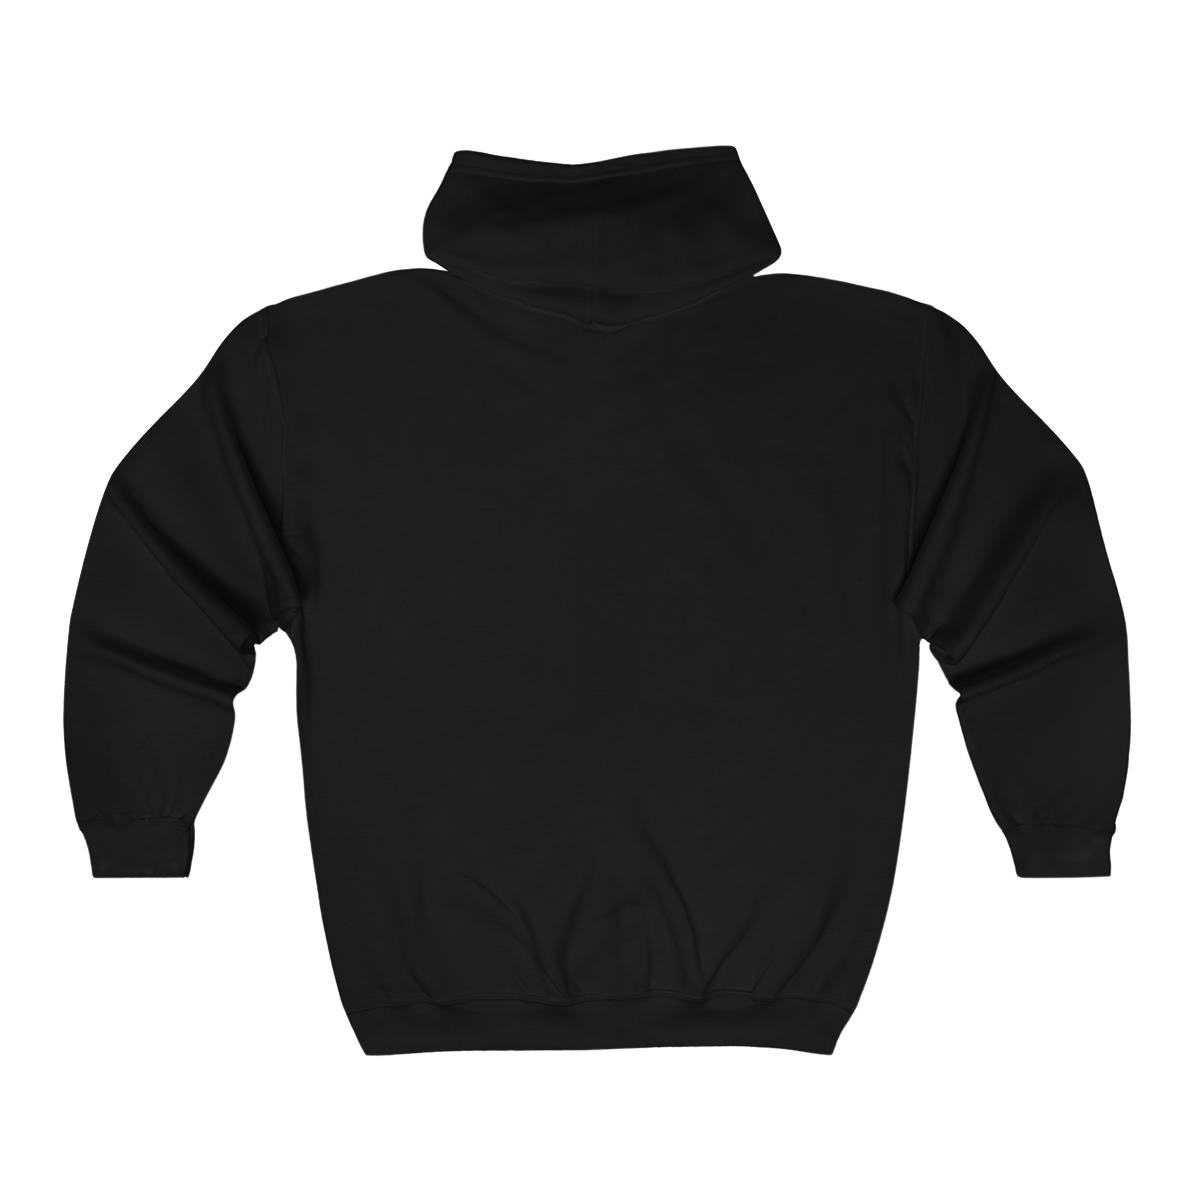 XIII Minutes – Cult Leader Full Zip Hooded Sweatshirt